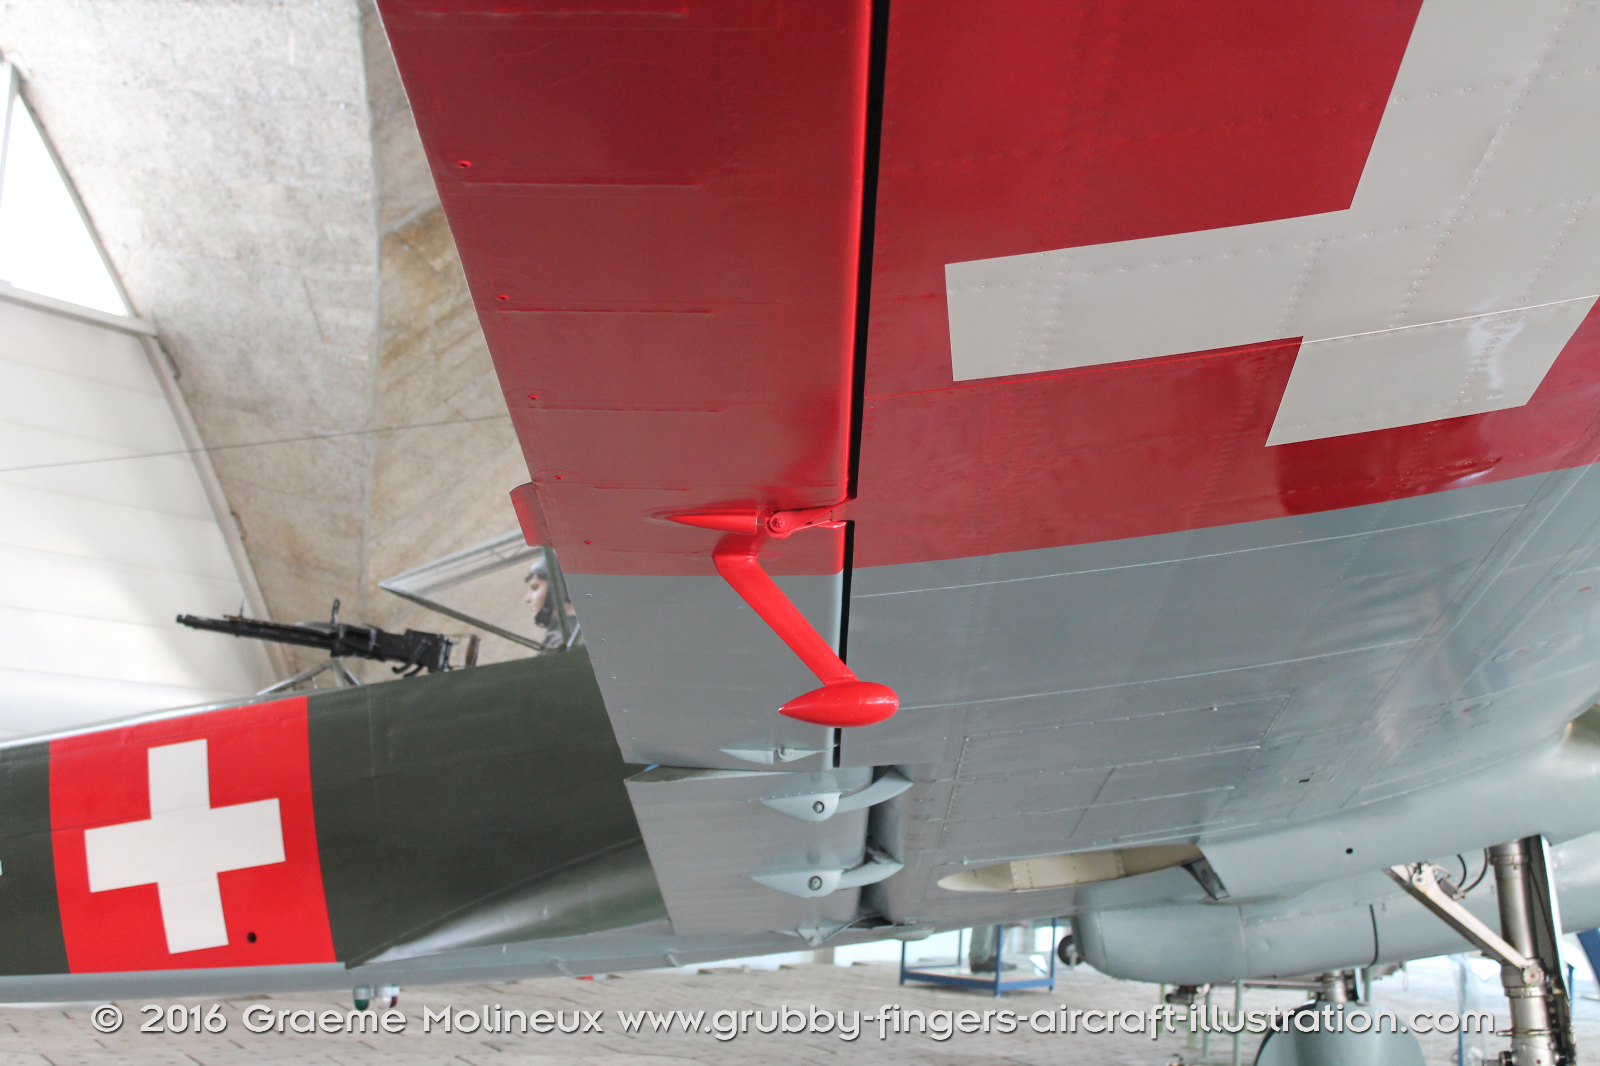 K+W_C-36_C-534_Swiss_Air_Force_Museum_2015_20_GrubbyFingers